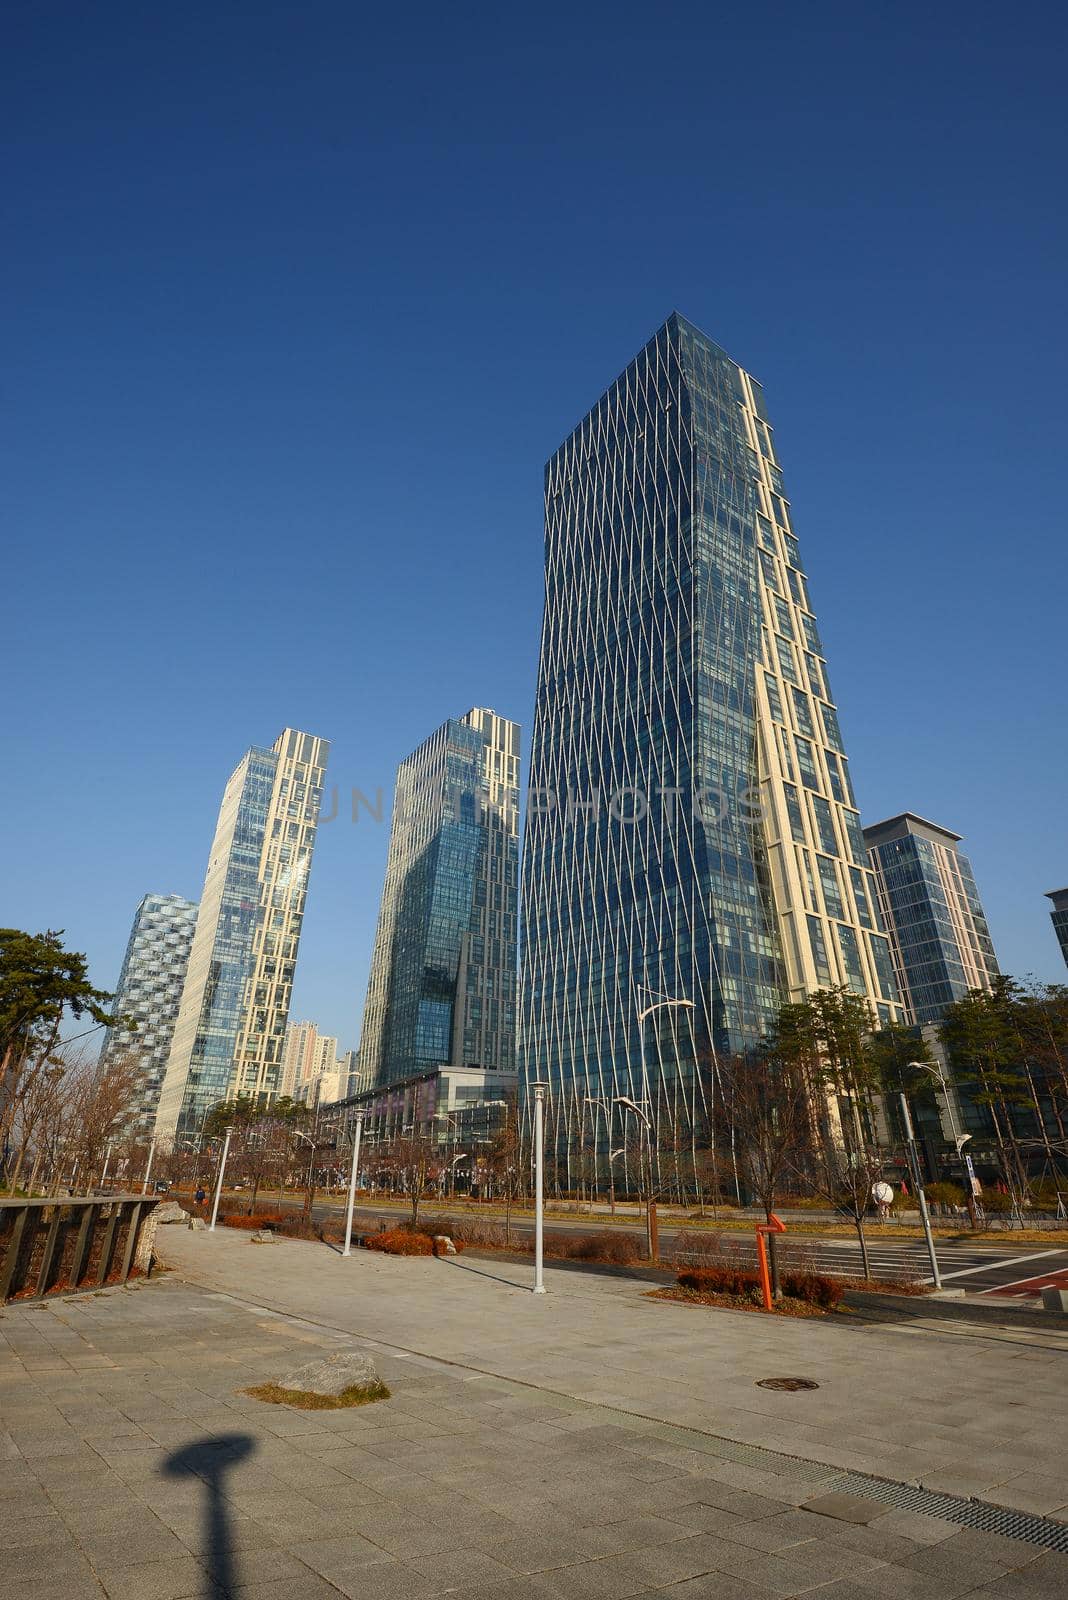 building in songdo park neaer incheon, korea